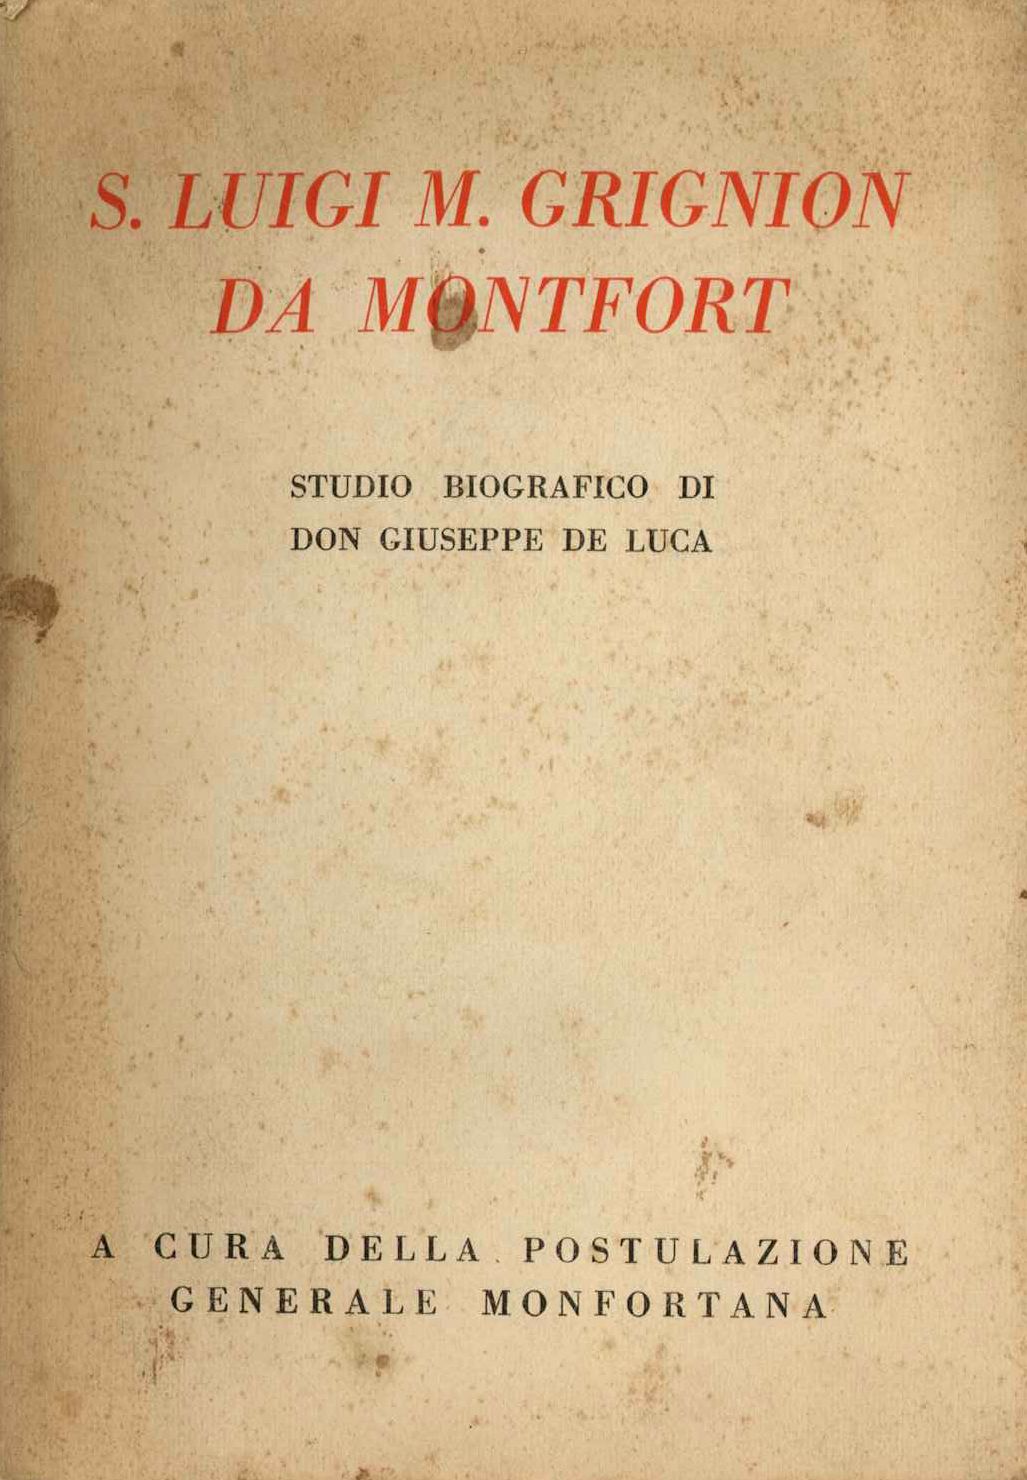 S. Luigi M. Grignion da Montfort. Studio biografico di Don Giuse